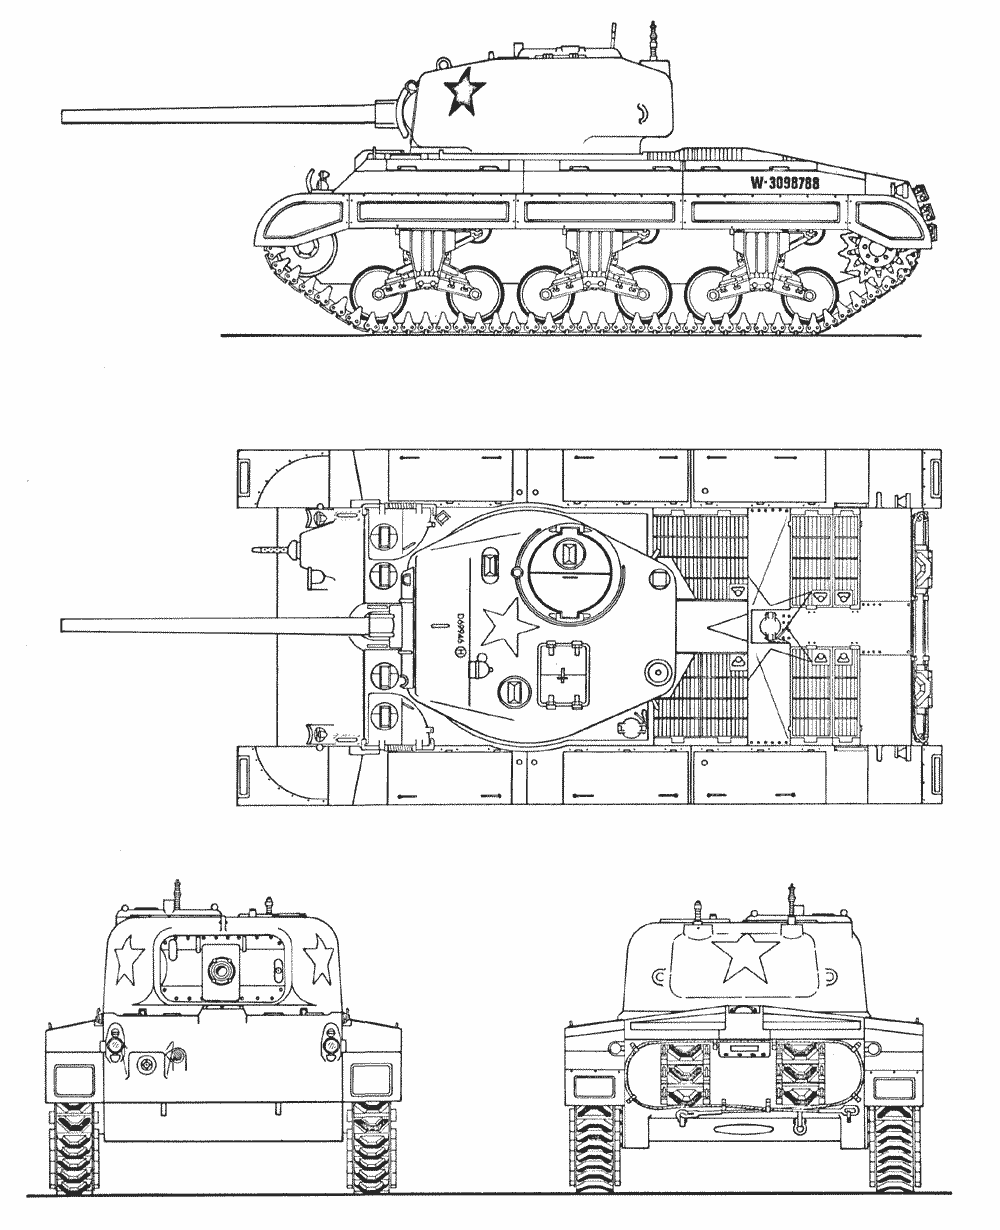 T23 Medium Tank blueprint